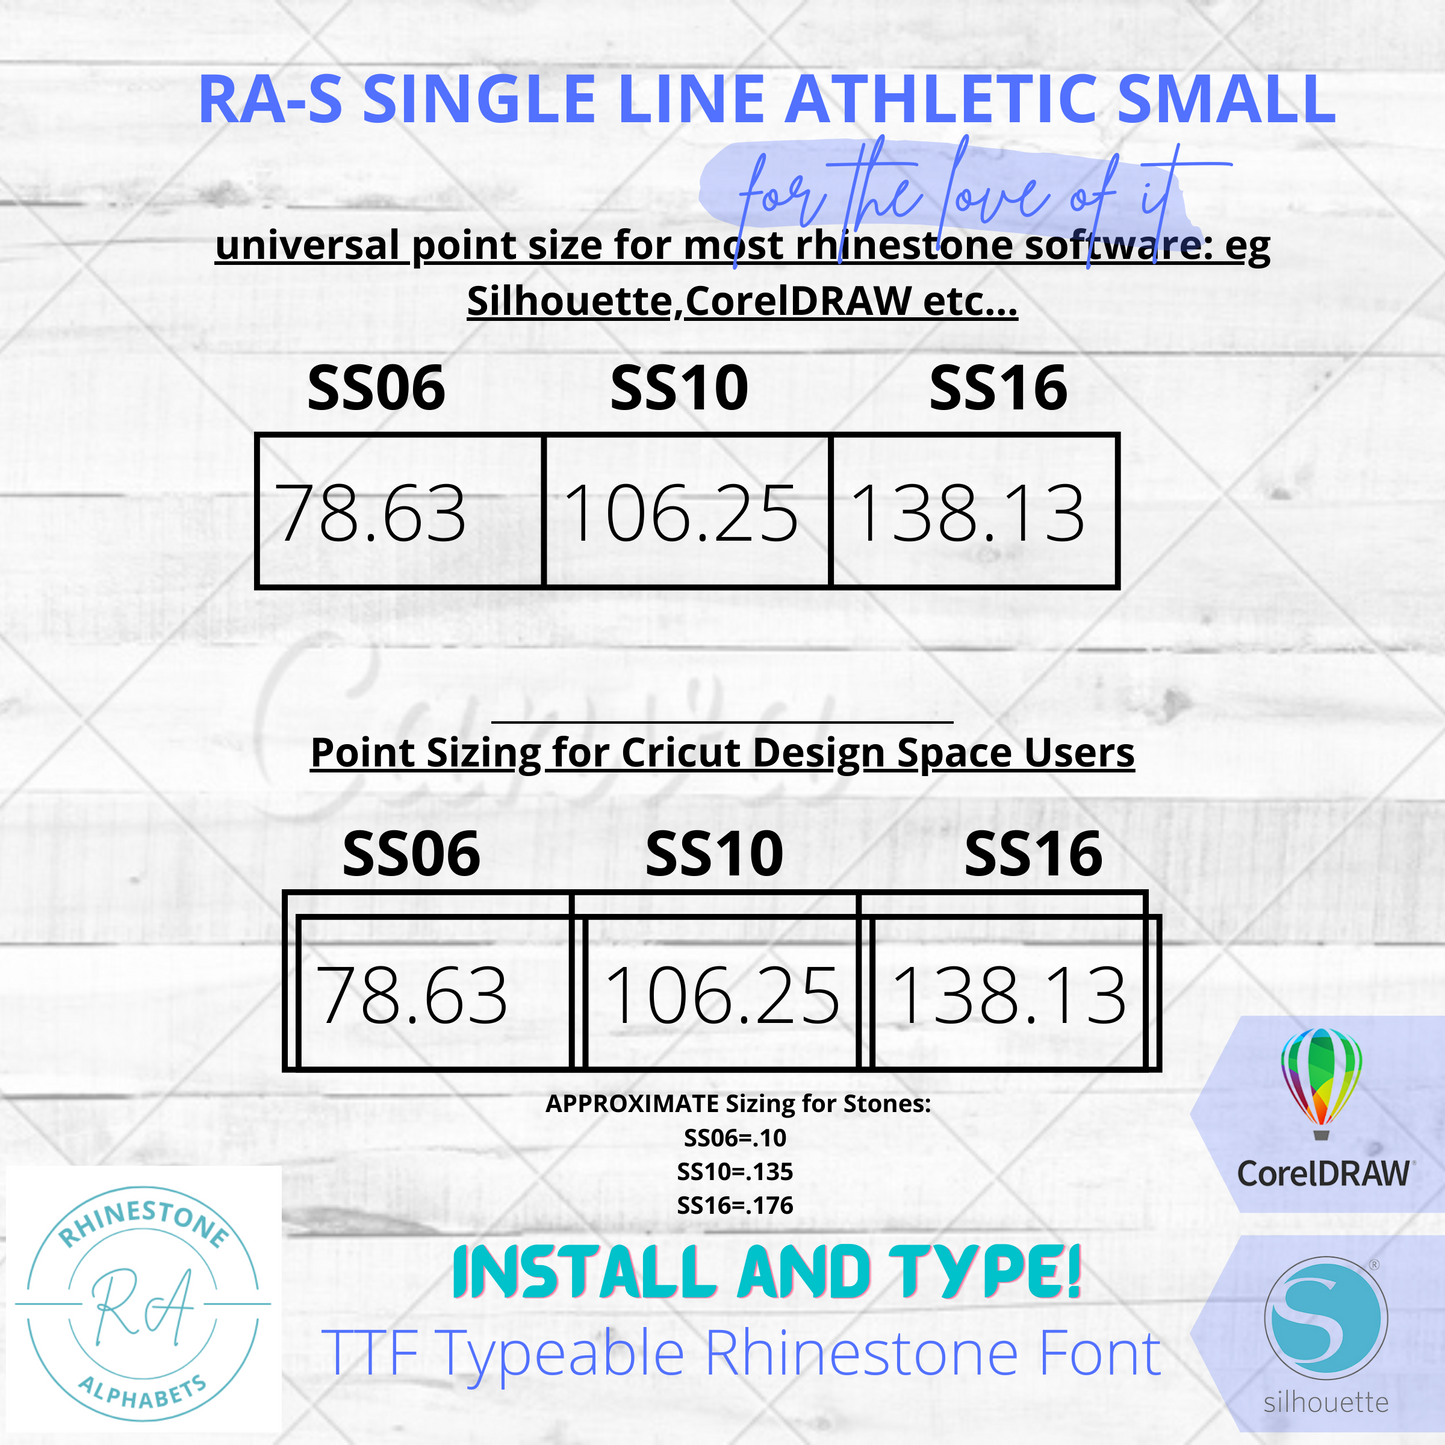 RA-S Singleline Athletic Small